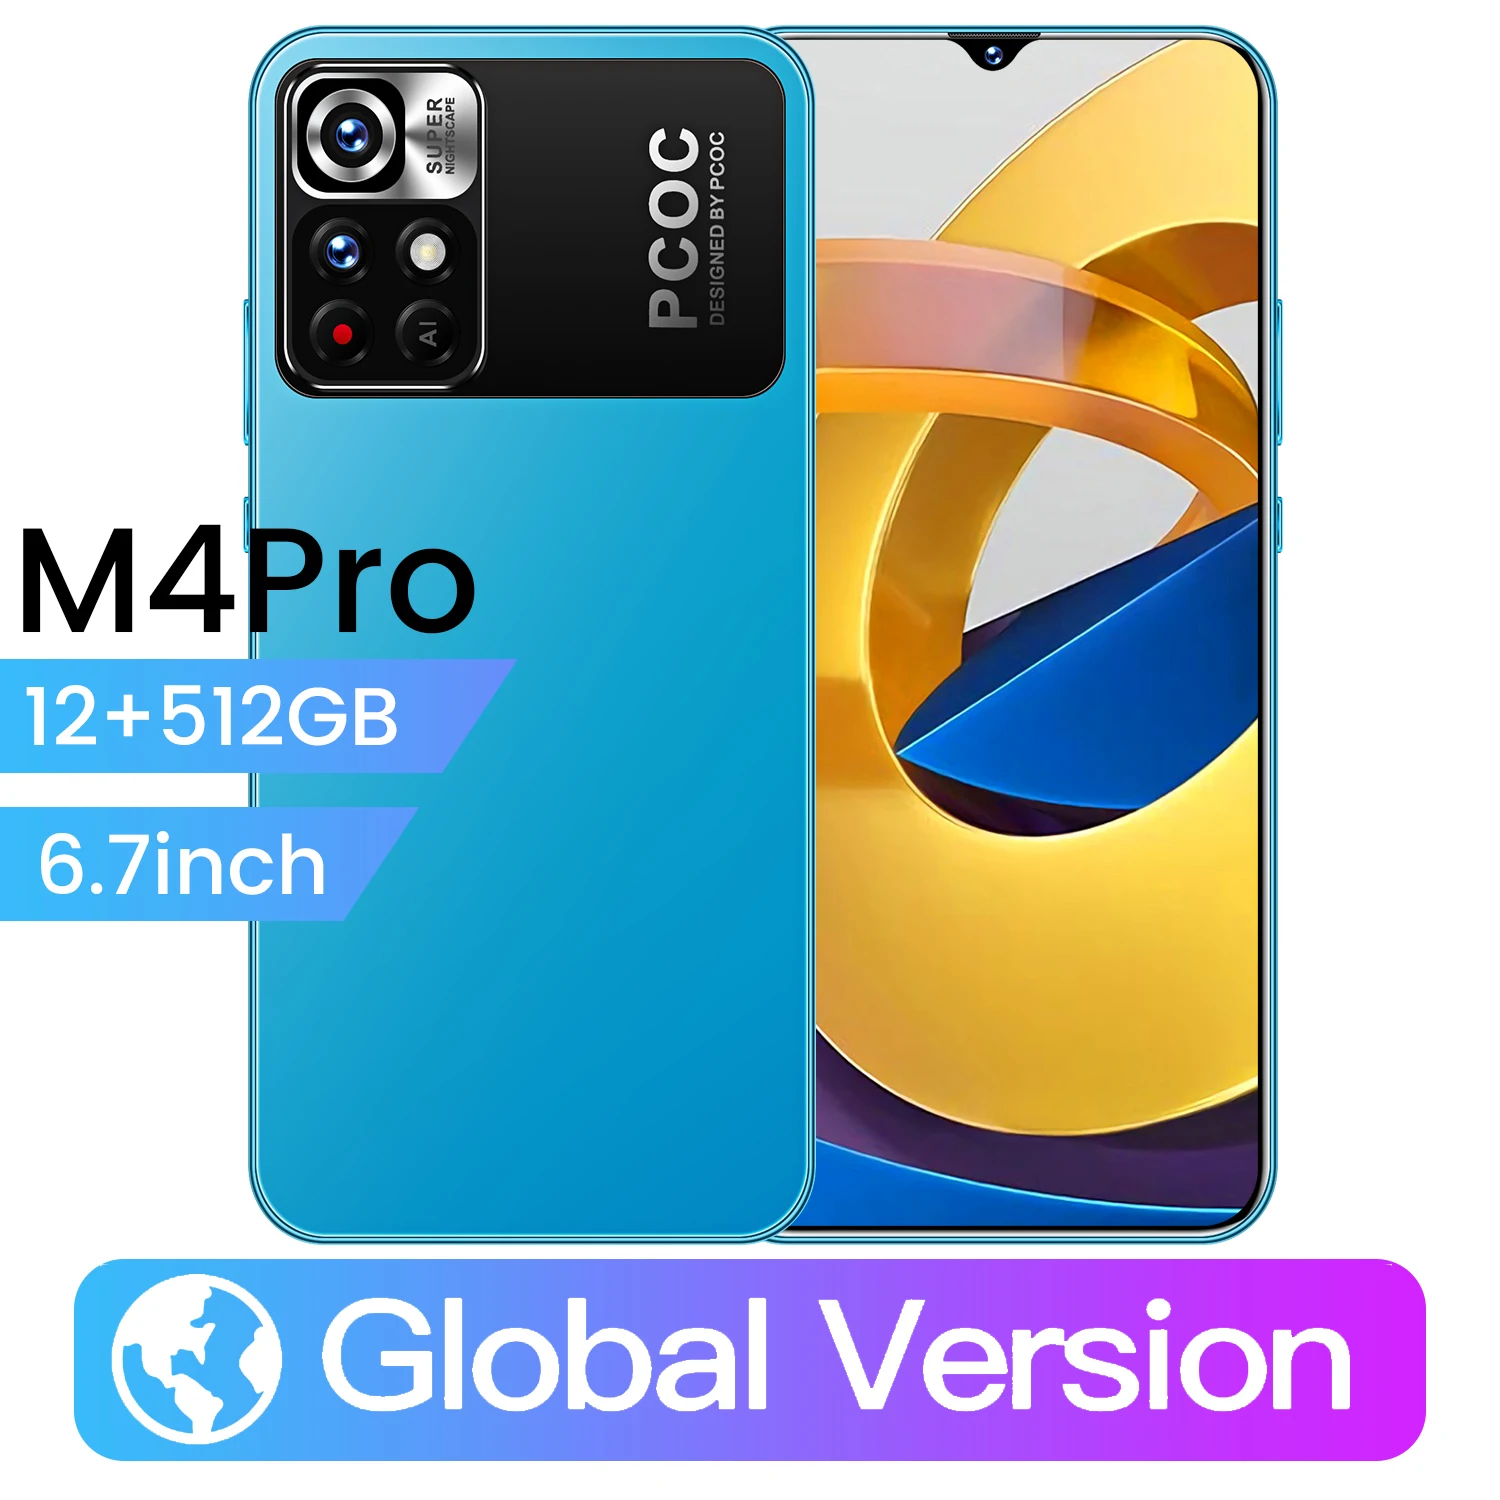 M4Pro 12GB 512GB MobilePhones Android Smartphone Celulares Cellphone Desbloqueados Global Vesion Unlocked Dual SIM